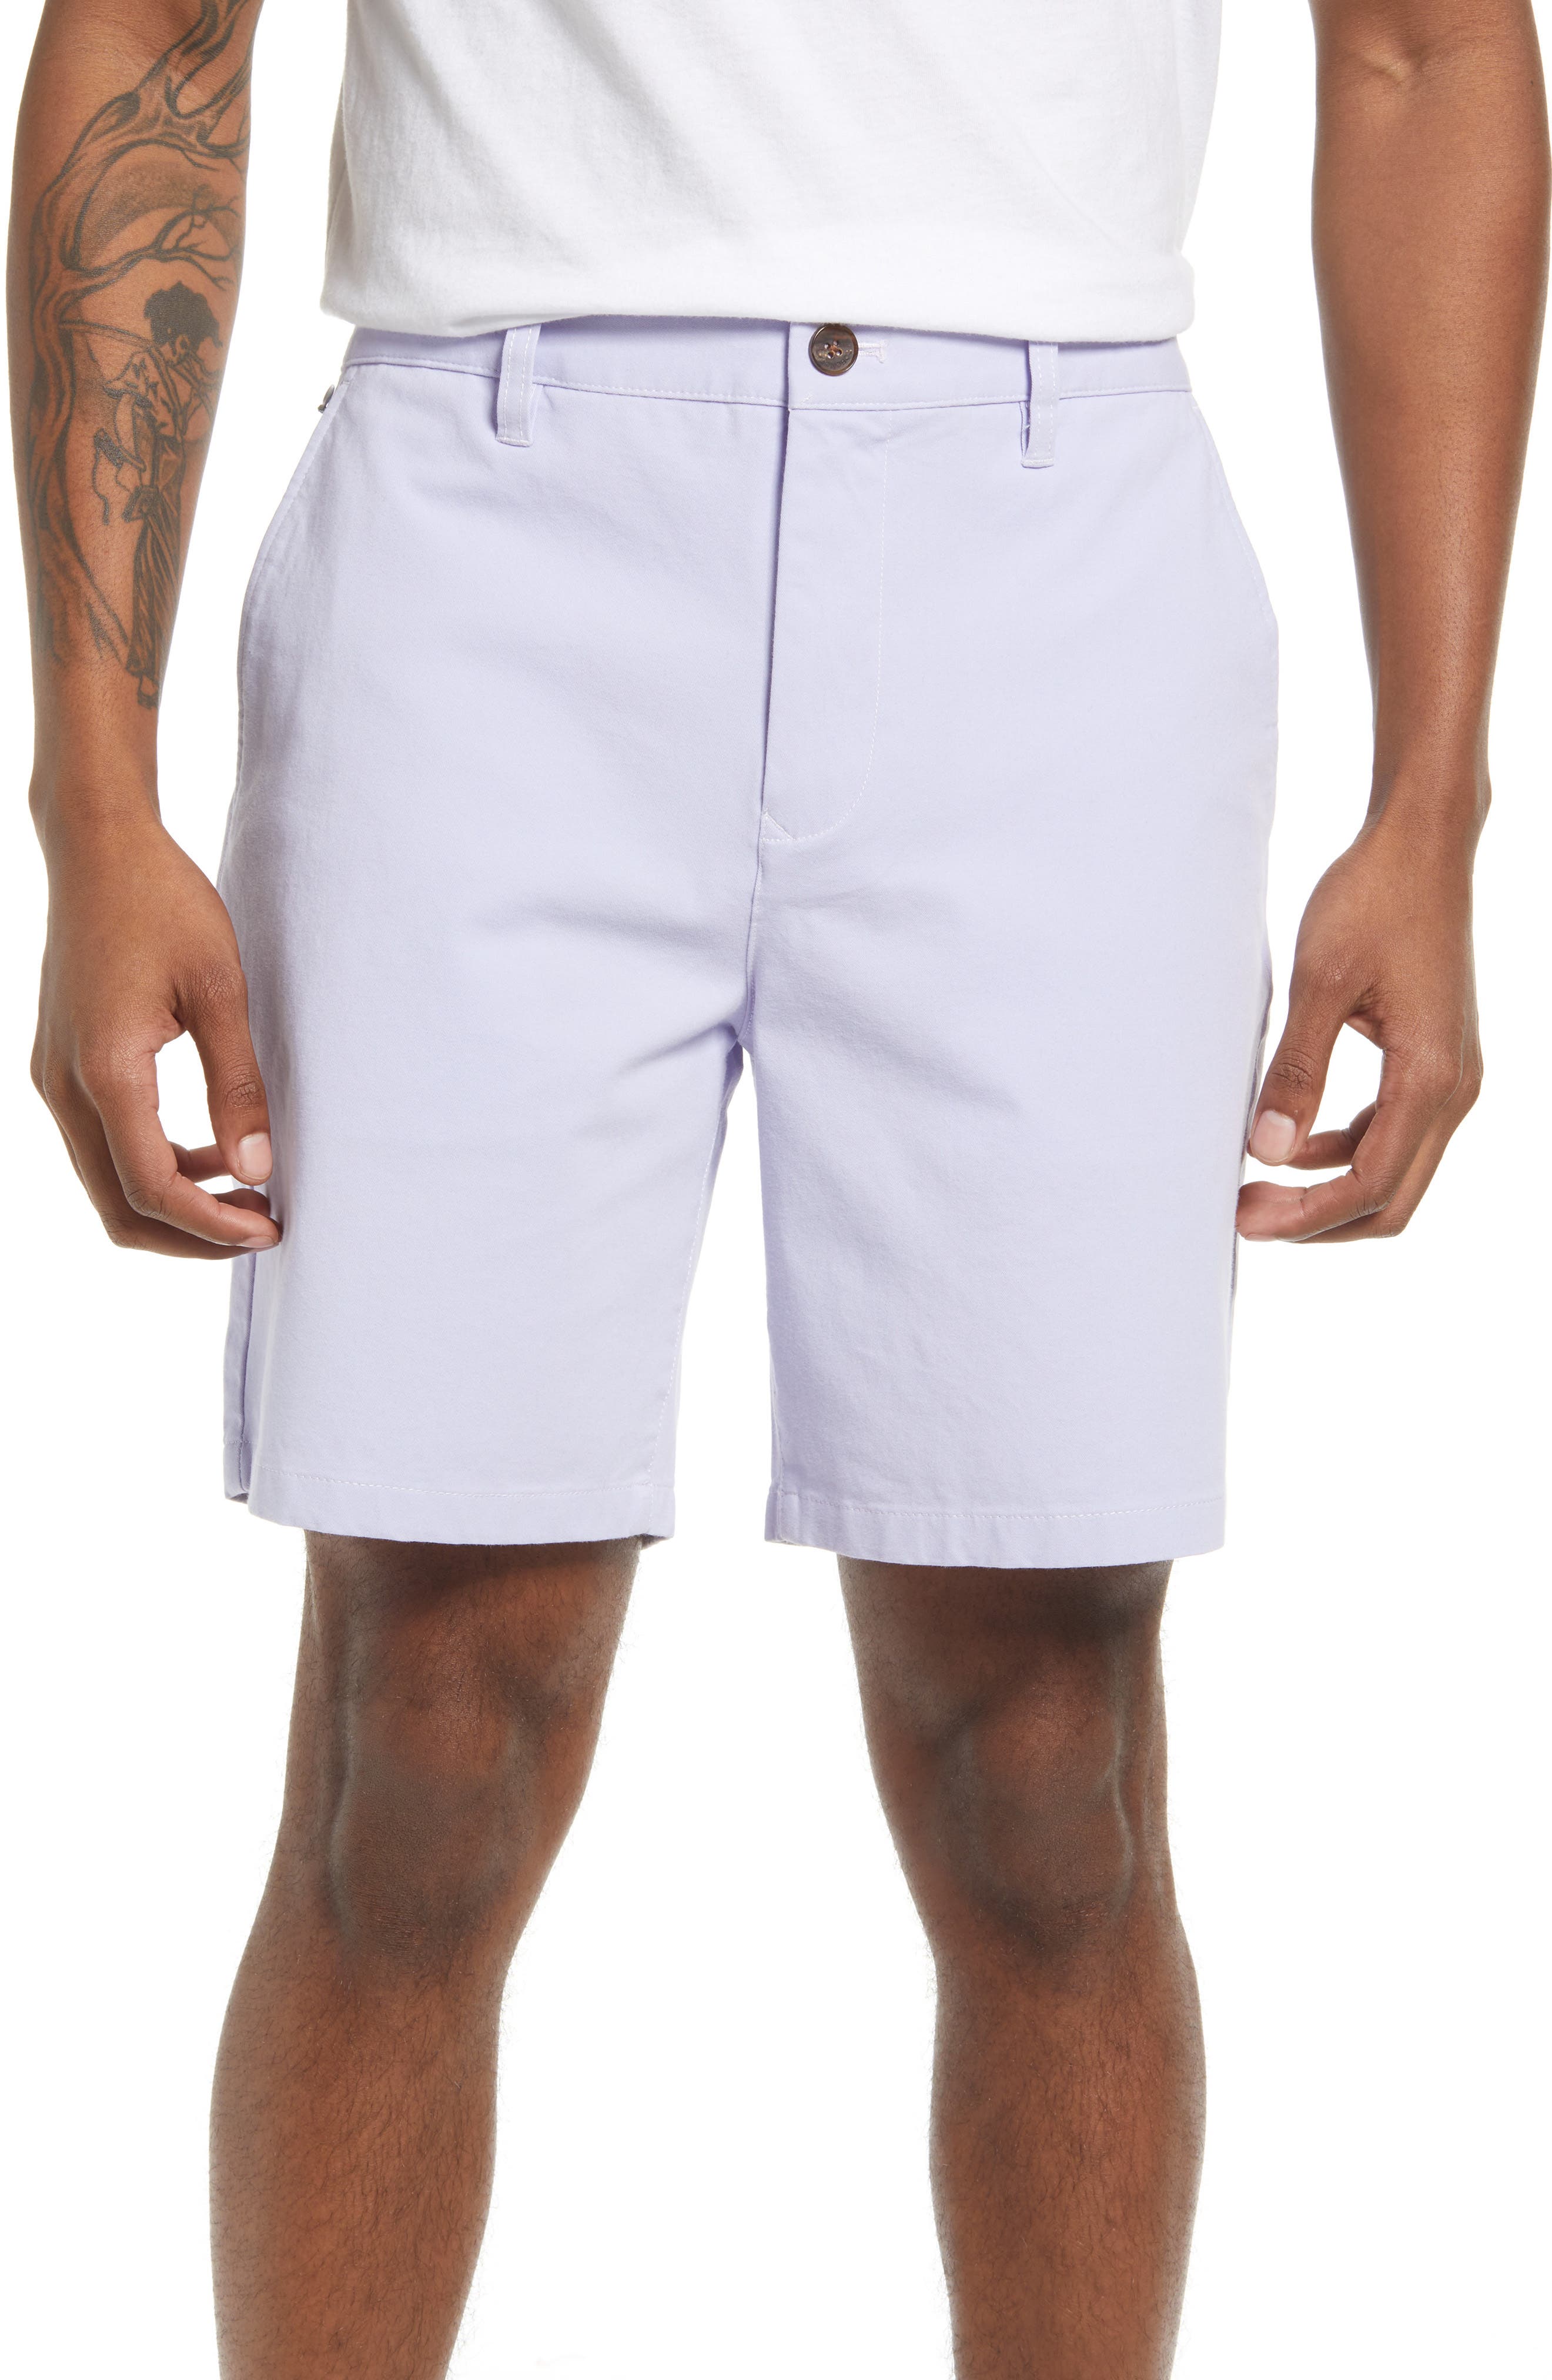 Arizona Girls size 14 1/2 Cotton Casual Shorts Blue White Plaid Designer Kids